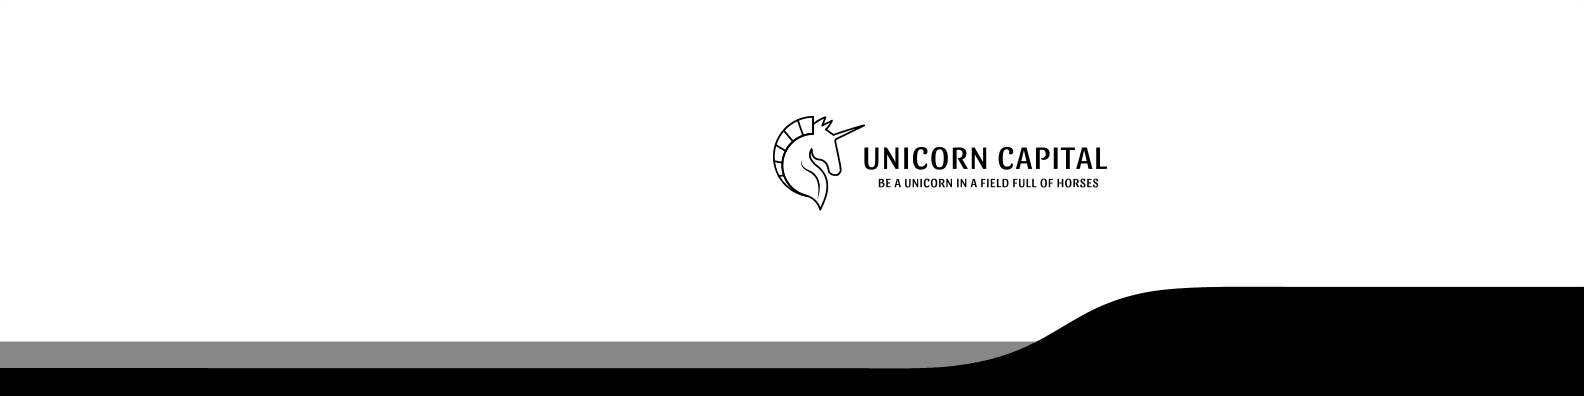 UnicornCapital banner